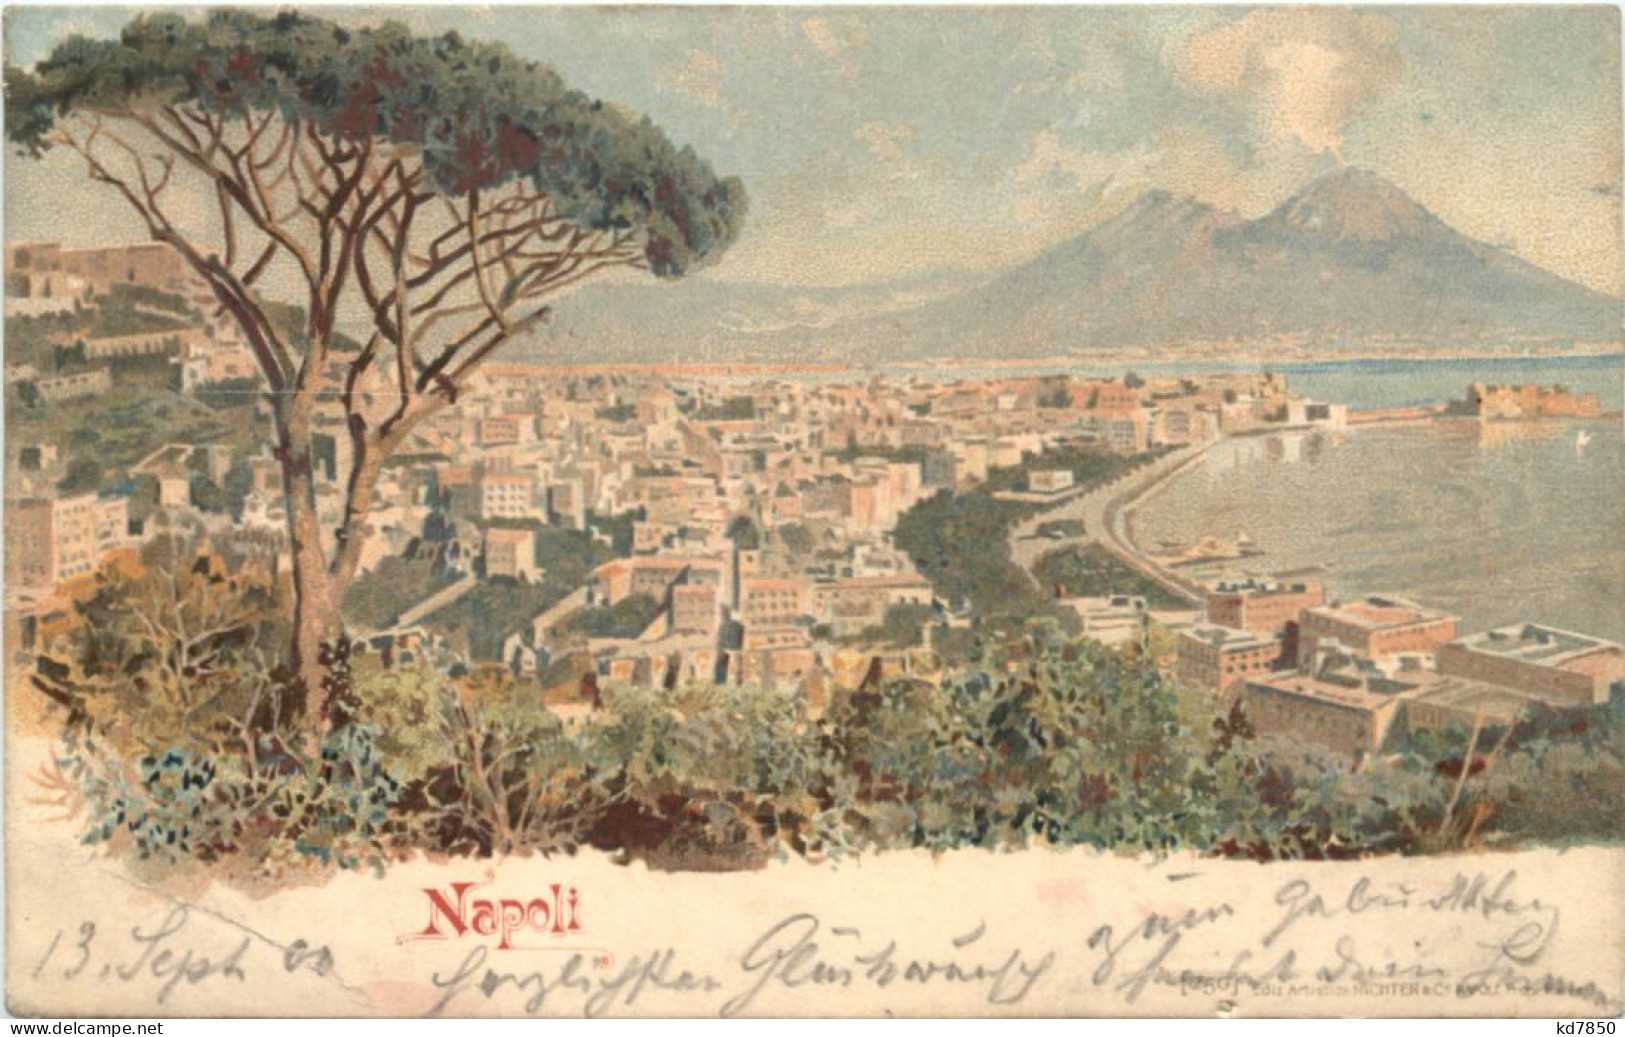 NApoli - Napoli